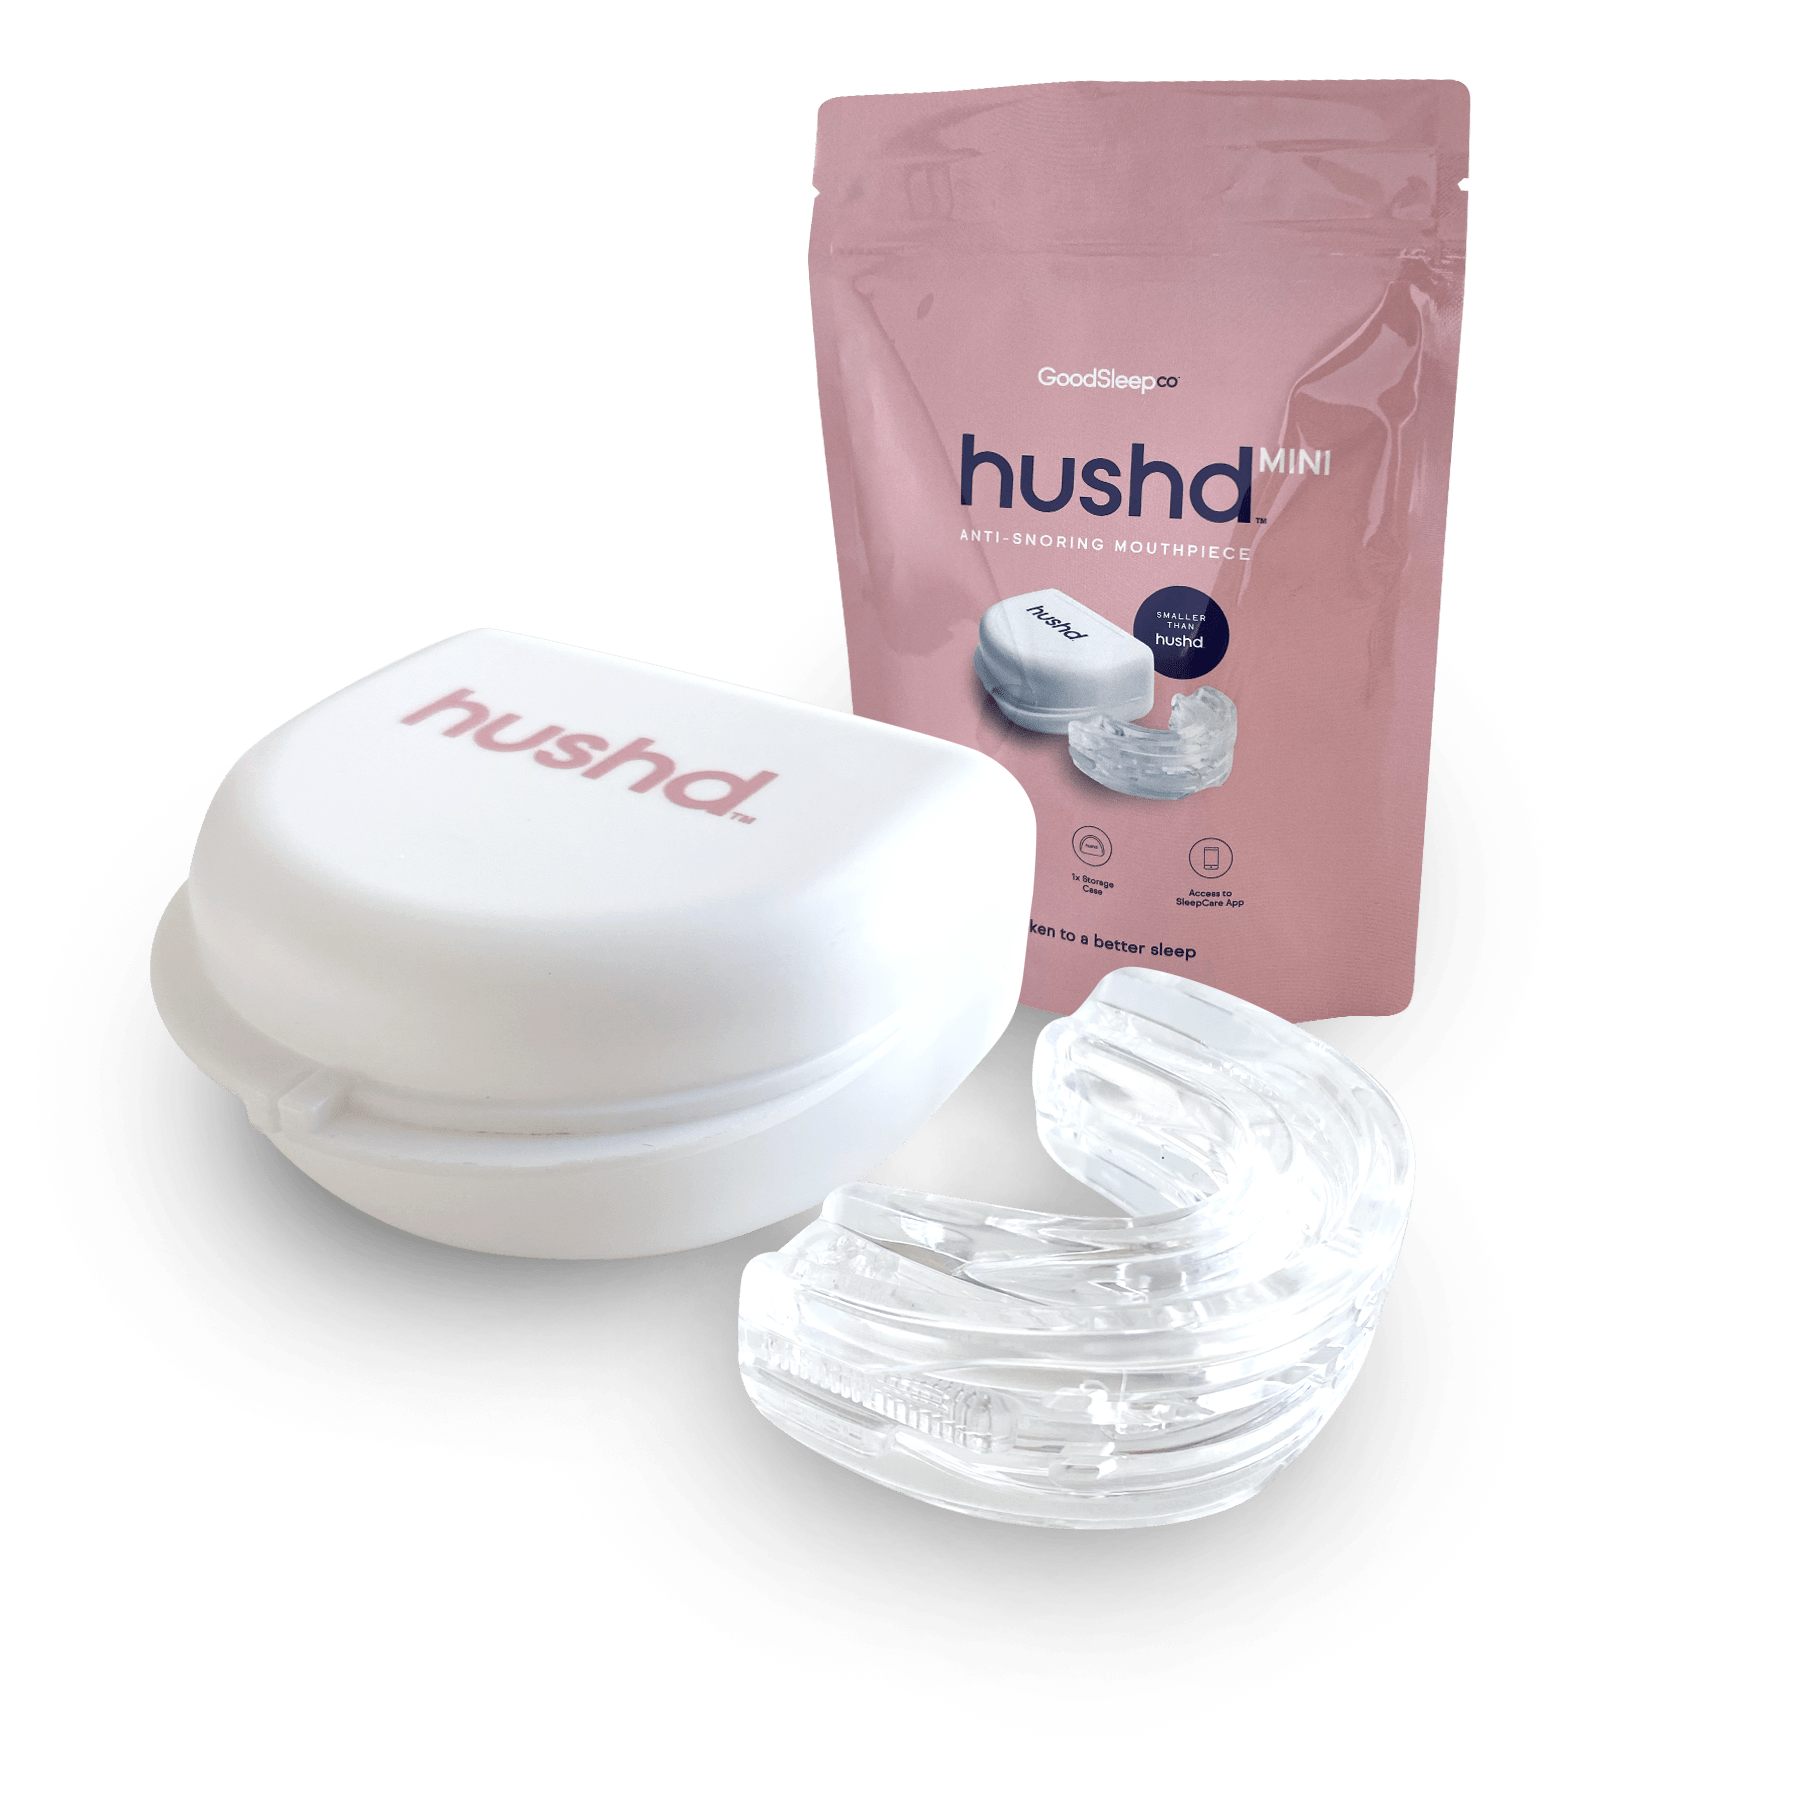 Hushd Anti-Snore Temporary Mouthpiece Alternative Therapy Good Sleep Co Mini 